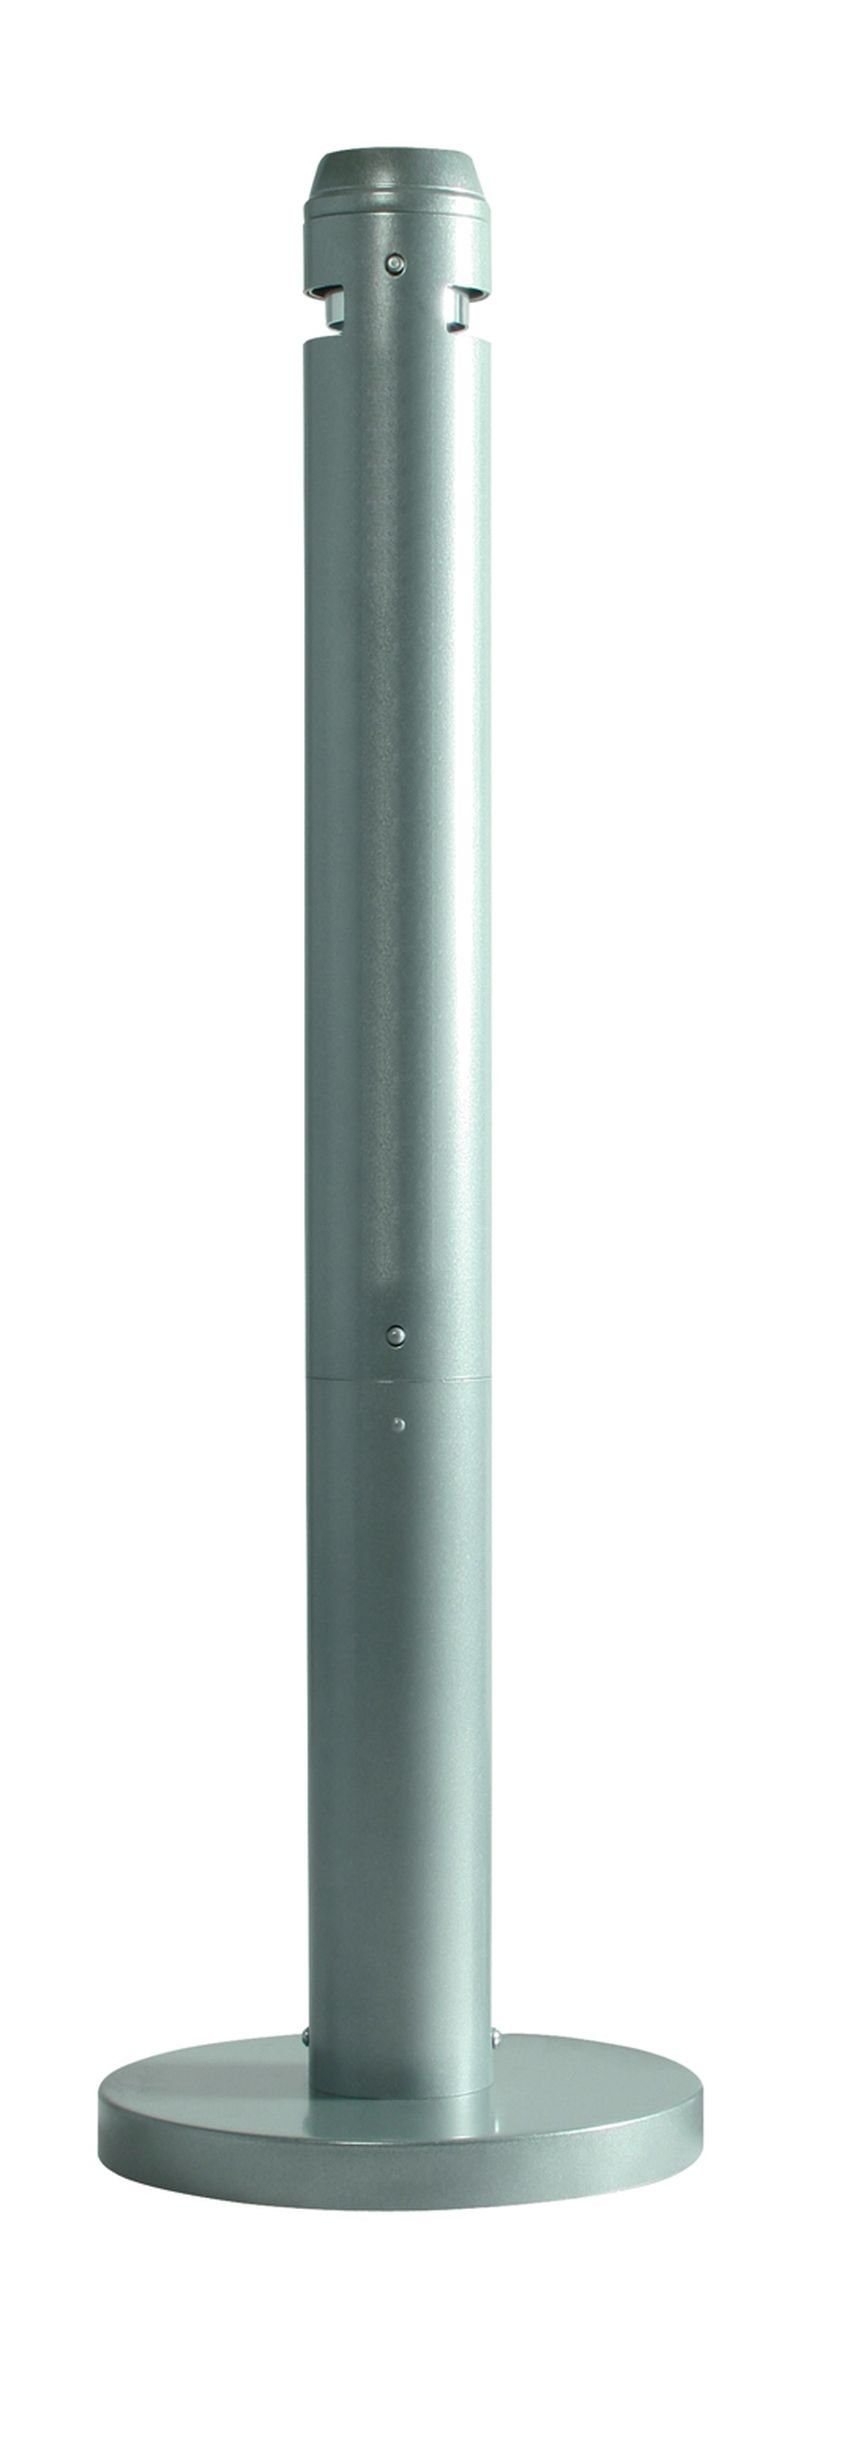 Rubbermaid Smokers' Pole, silber-metallic Mülleimer Rubbermaid